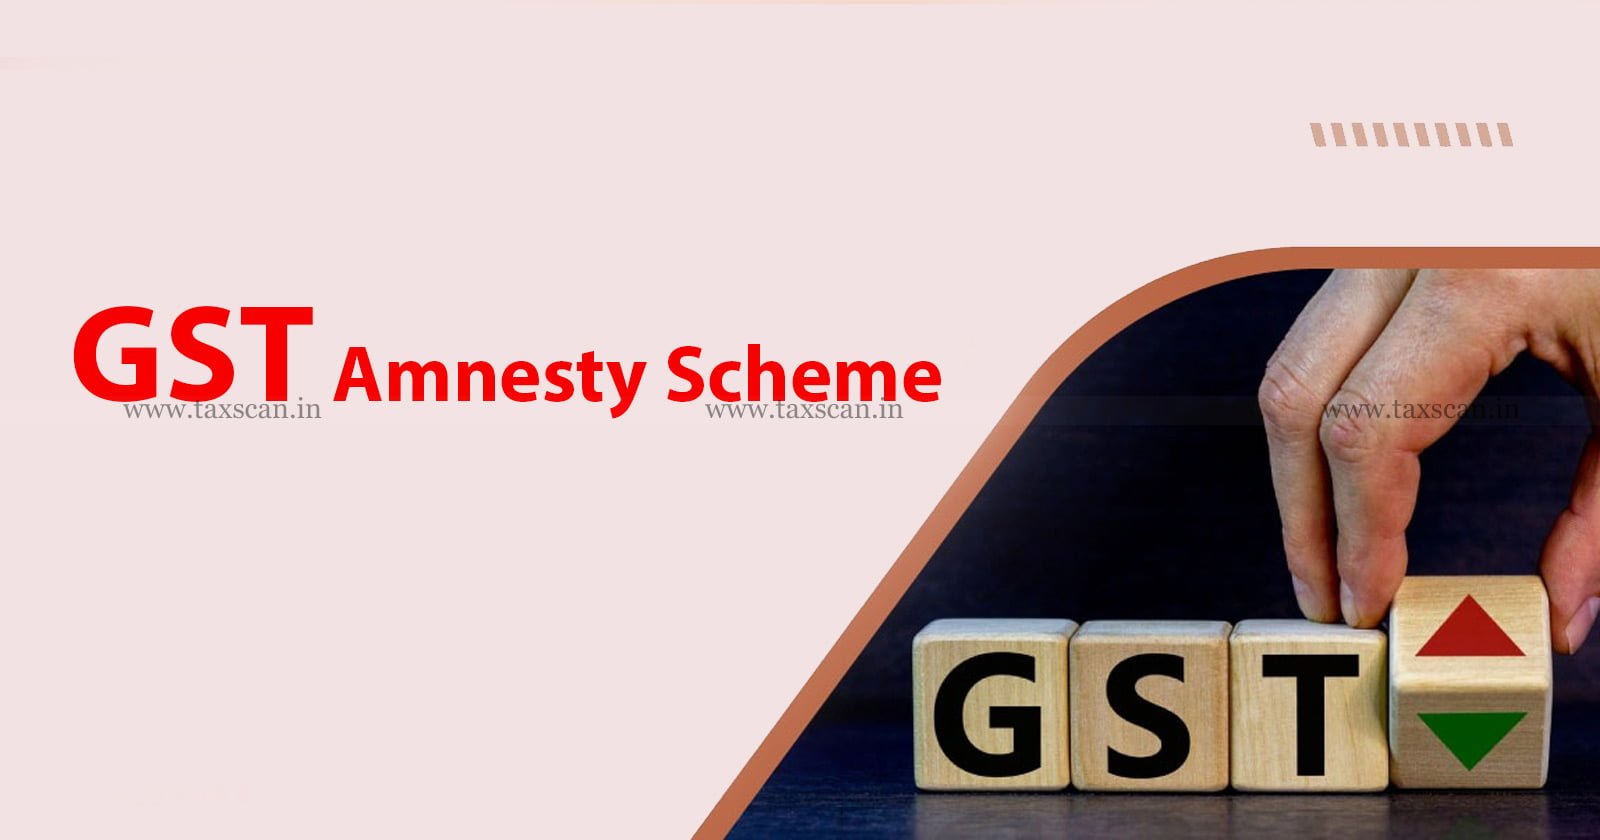 GST Amnesty Scheme for Revocation of Cancellation of Registration - GST Amnesty Scheme - Cancellation of Registration - Revocation of Cancellation of Registration - taxscan